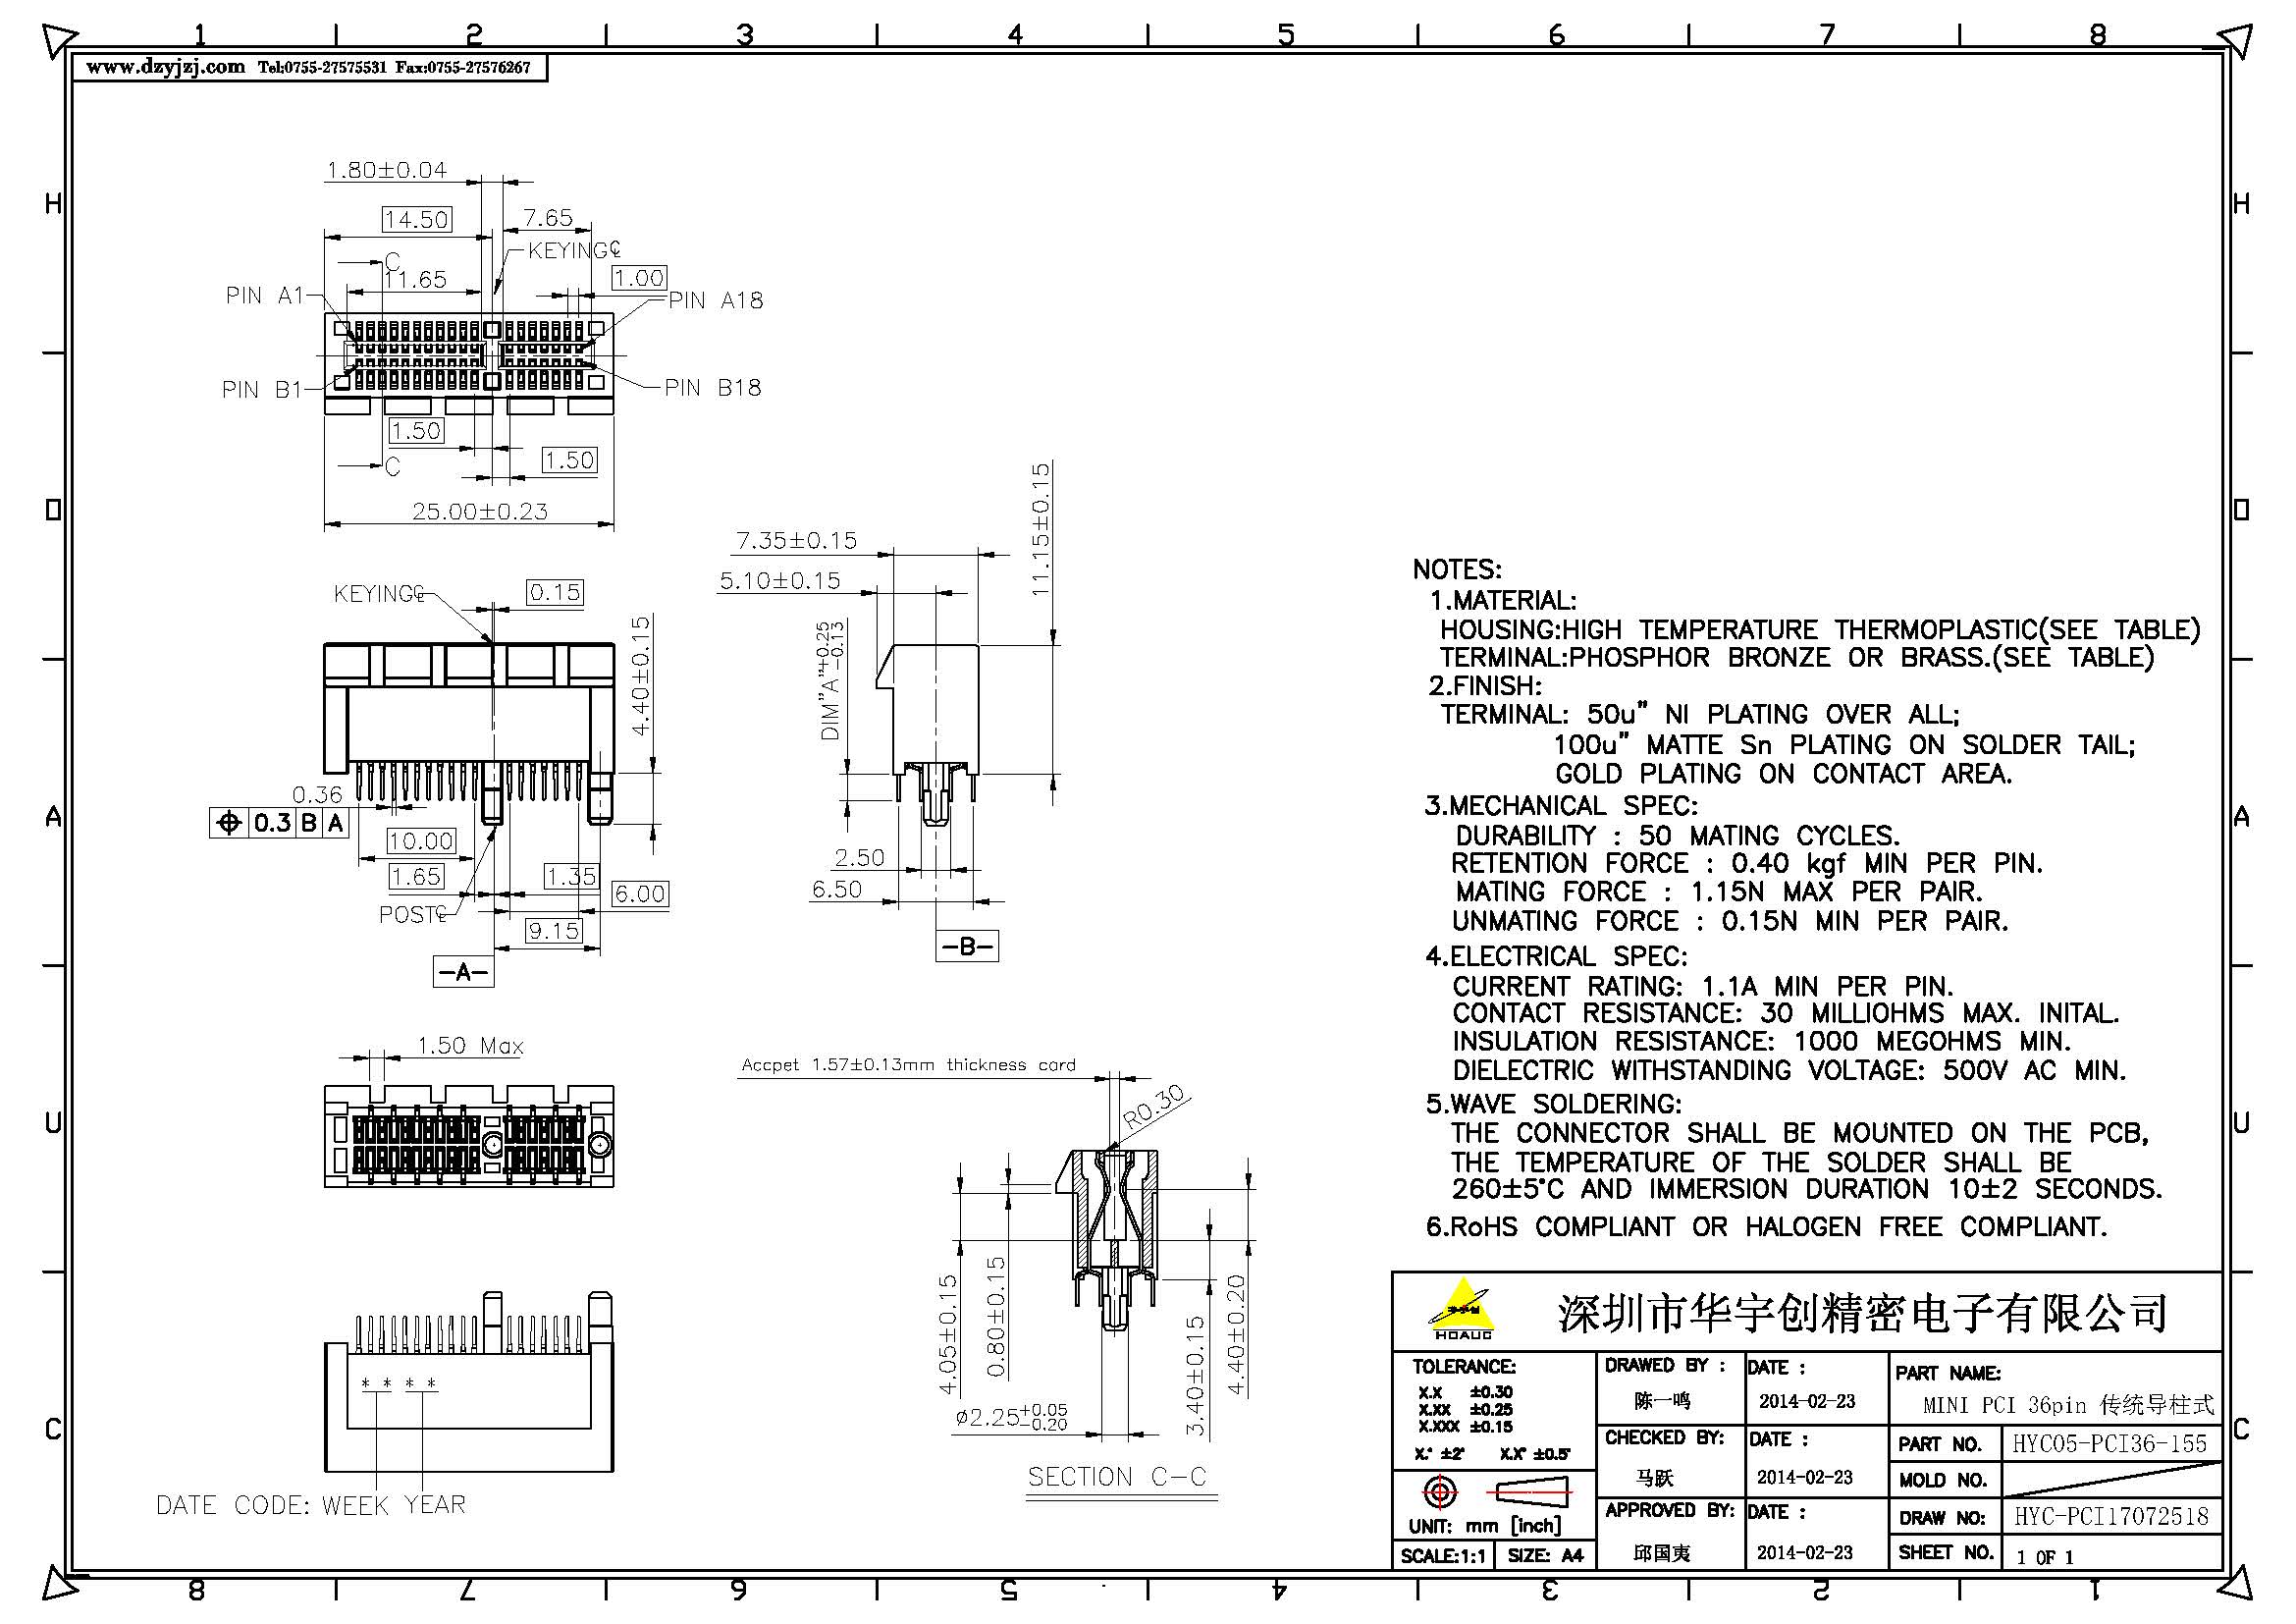 MINI PCI  36pin 传统导柱式产品图_页面_1.jpg